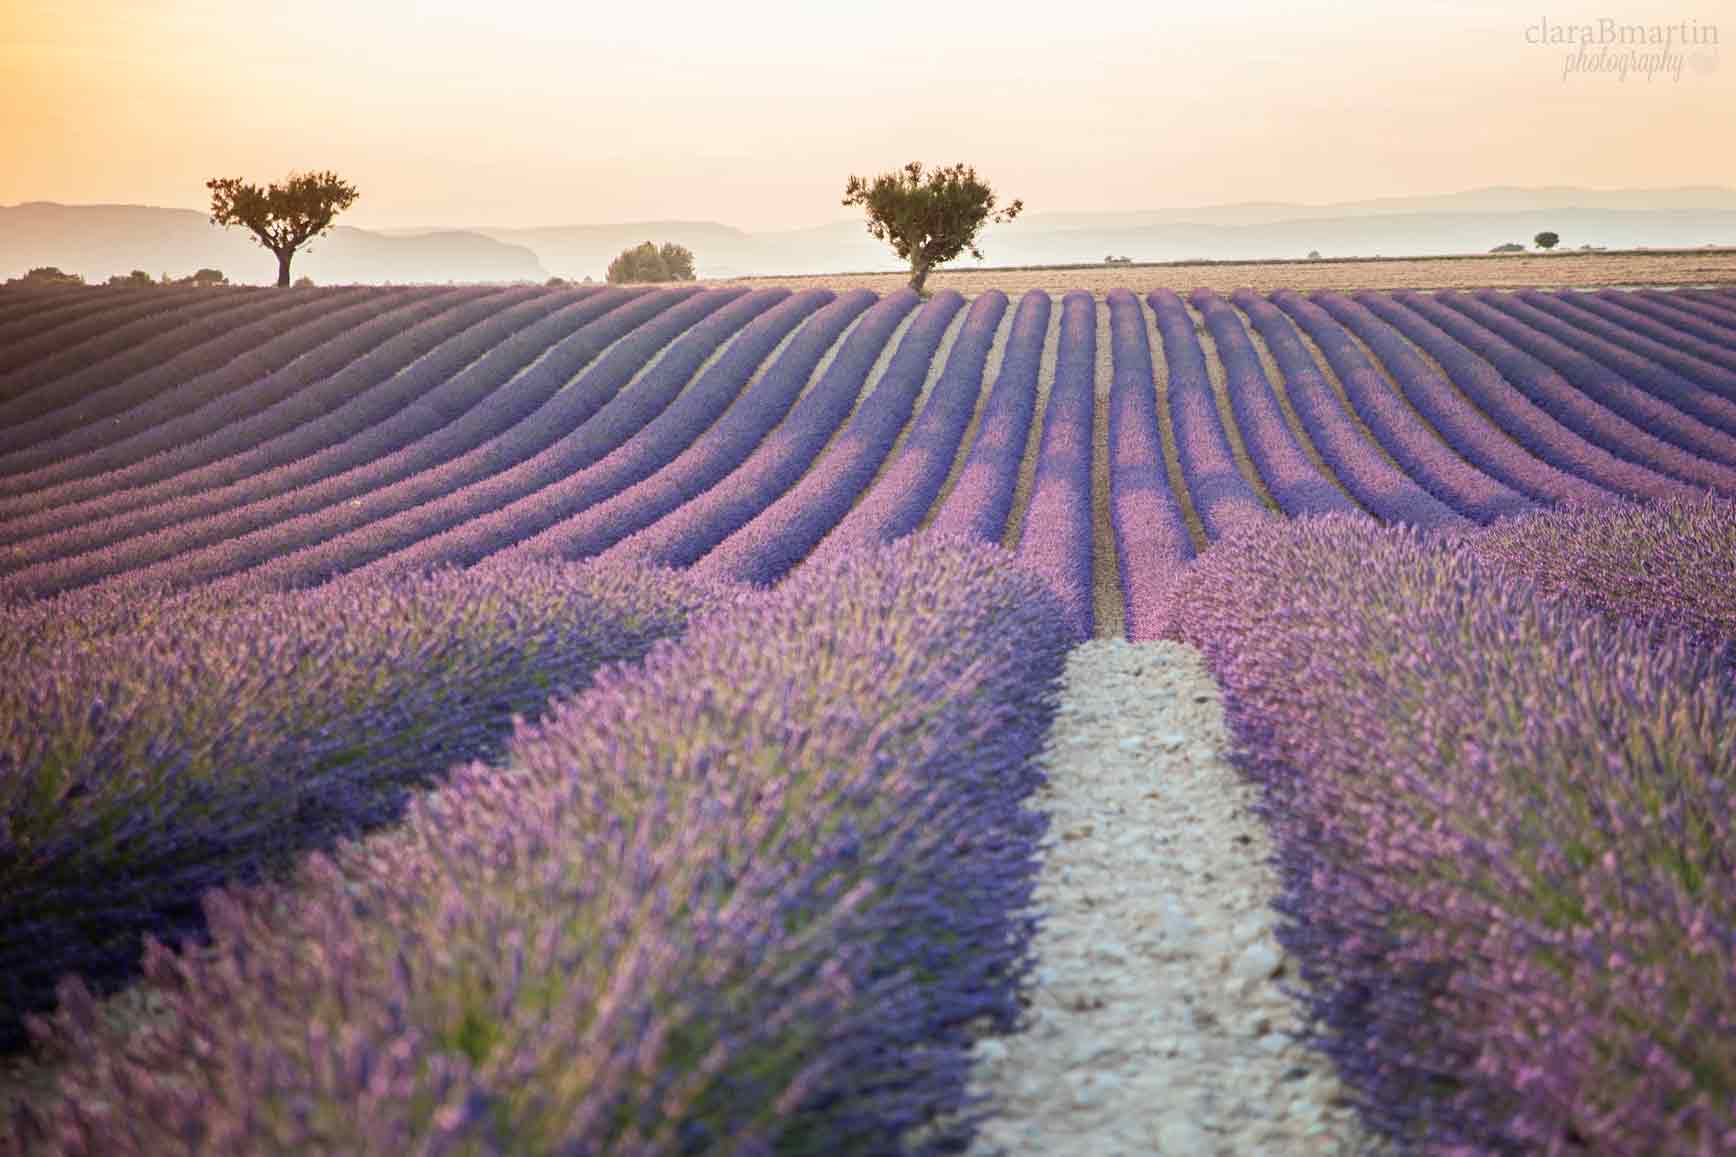 Lavender-fields-Provence-claraBmartin13